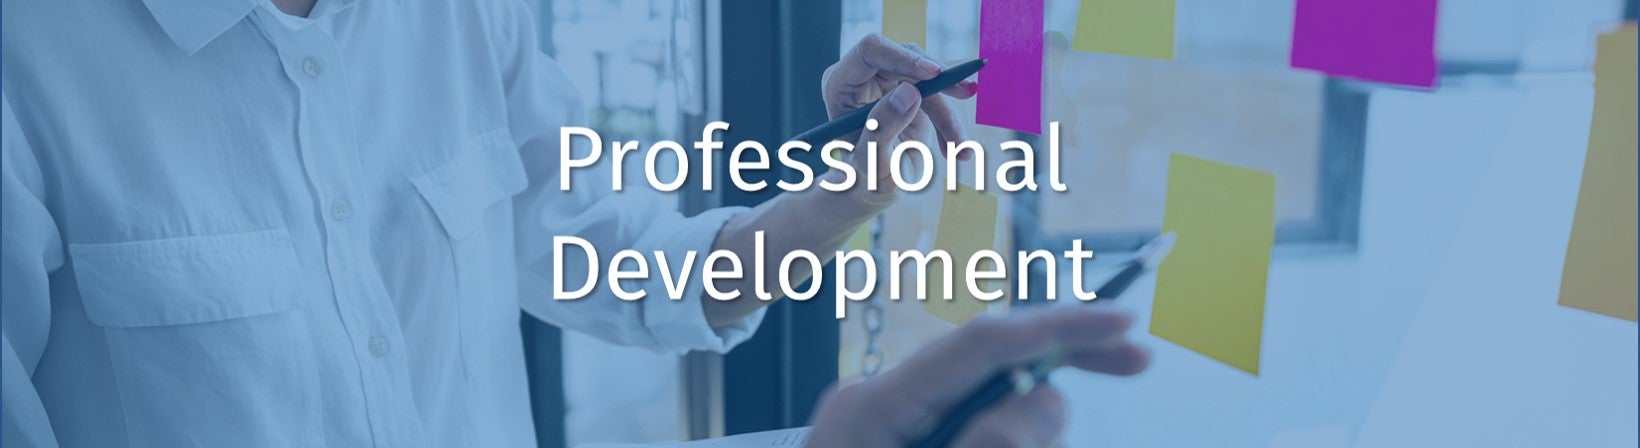 Employee Resources - Professional Development banner image